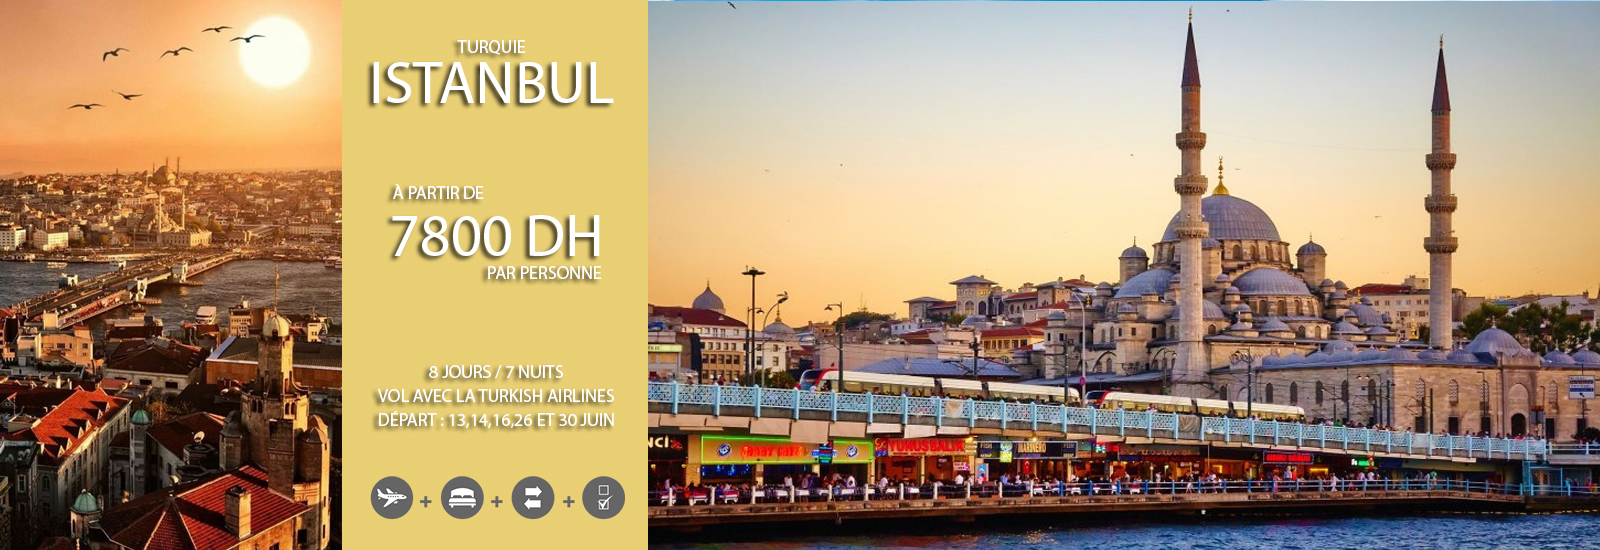 voyage-organisé-maroc-turquie-pas-cher-istanbul-juin-2018